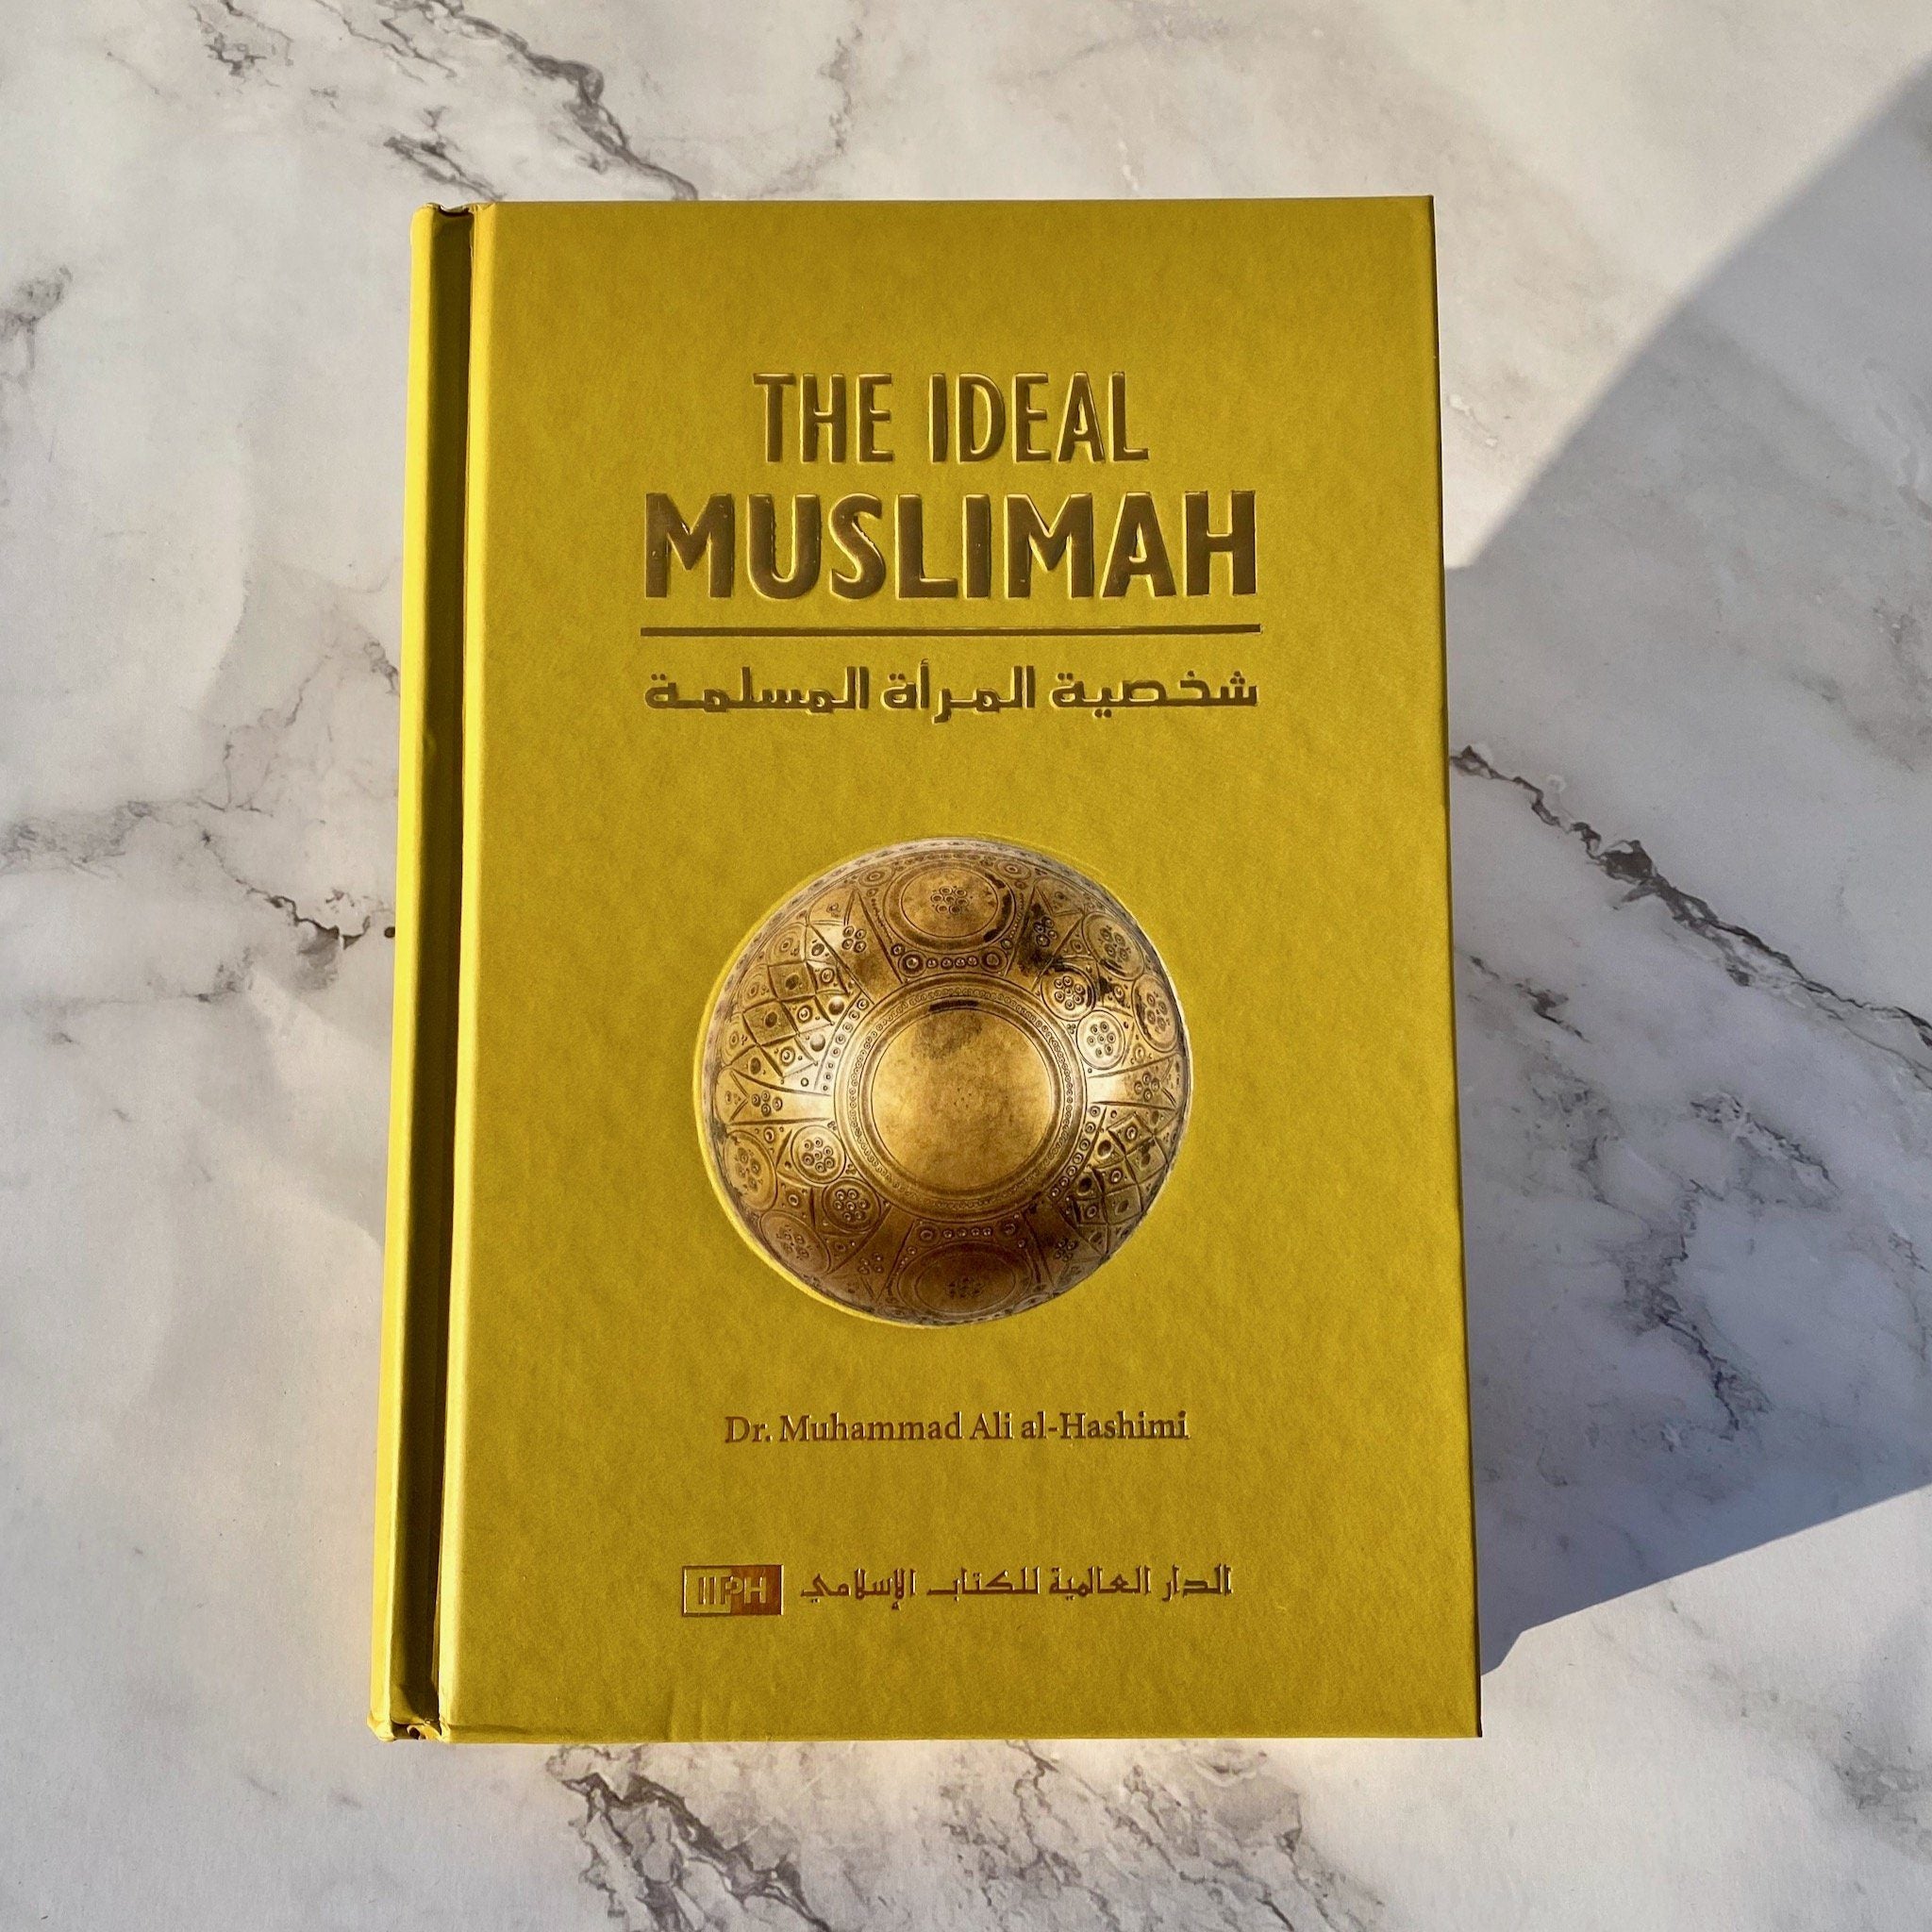 The Ideal Muslimah Book Fajr Noor Islamic Books Muslim Shop Sydney Brisbane Australia